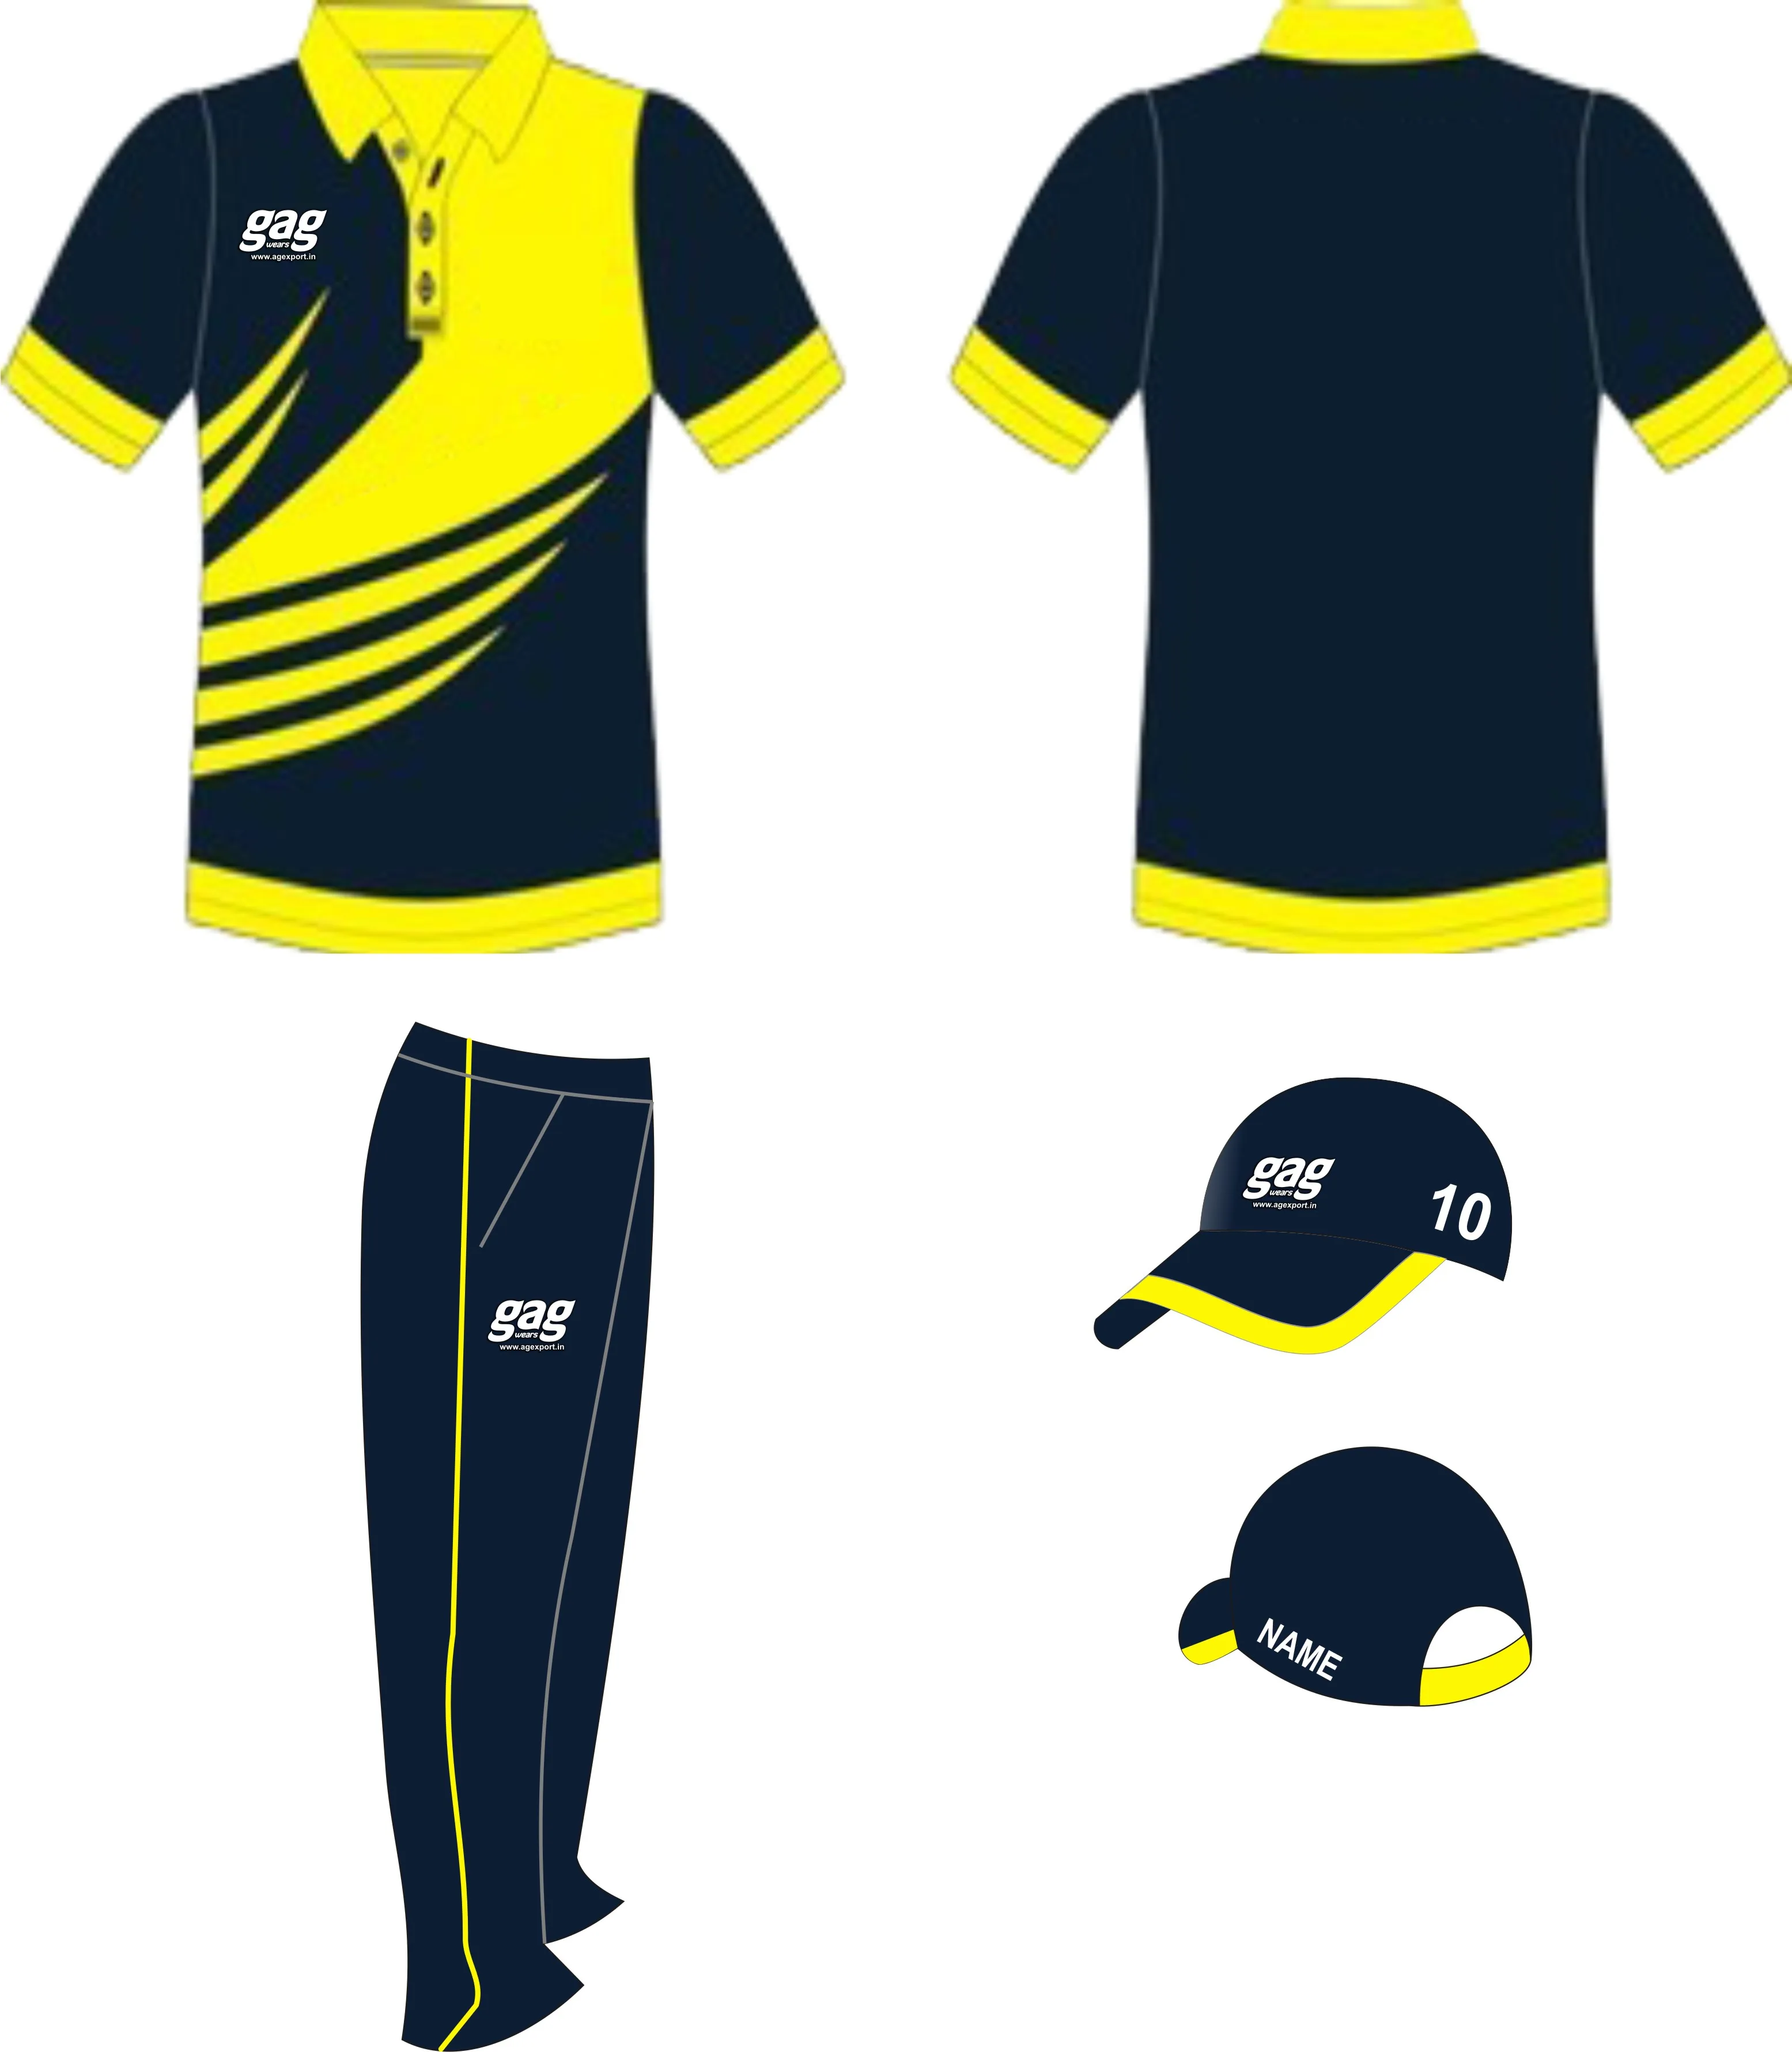 cricket jersey